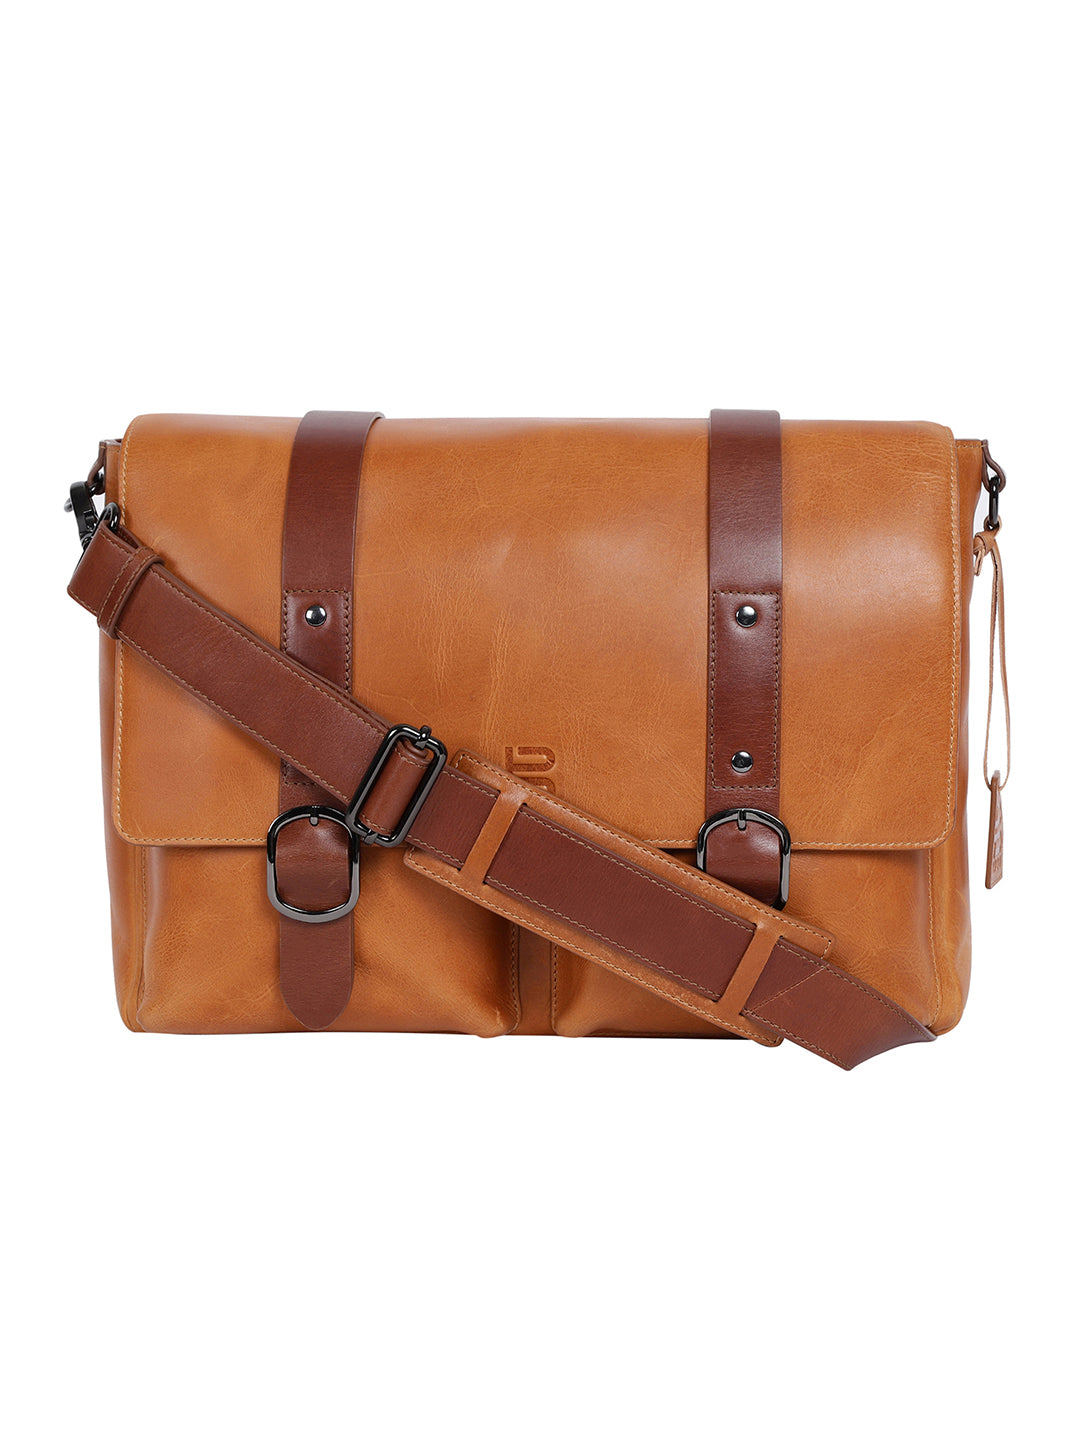 BAGATT Light Brown Leather Laptop Bag